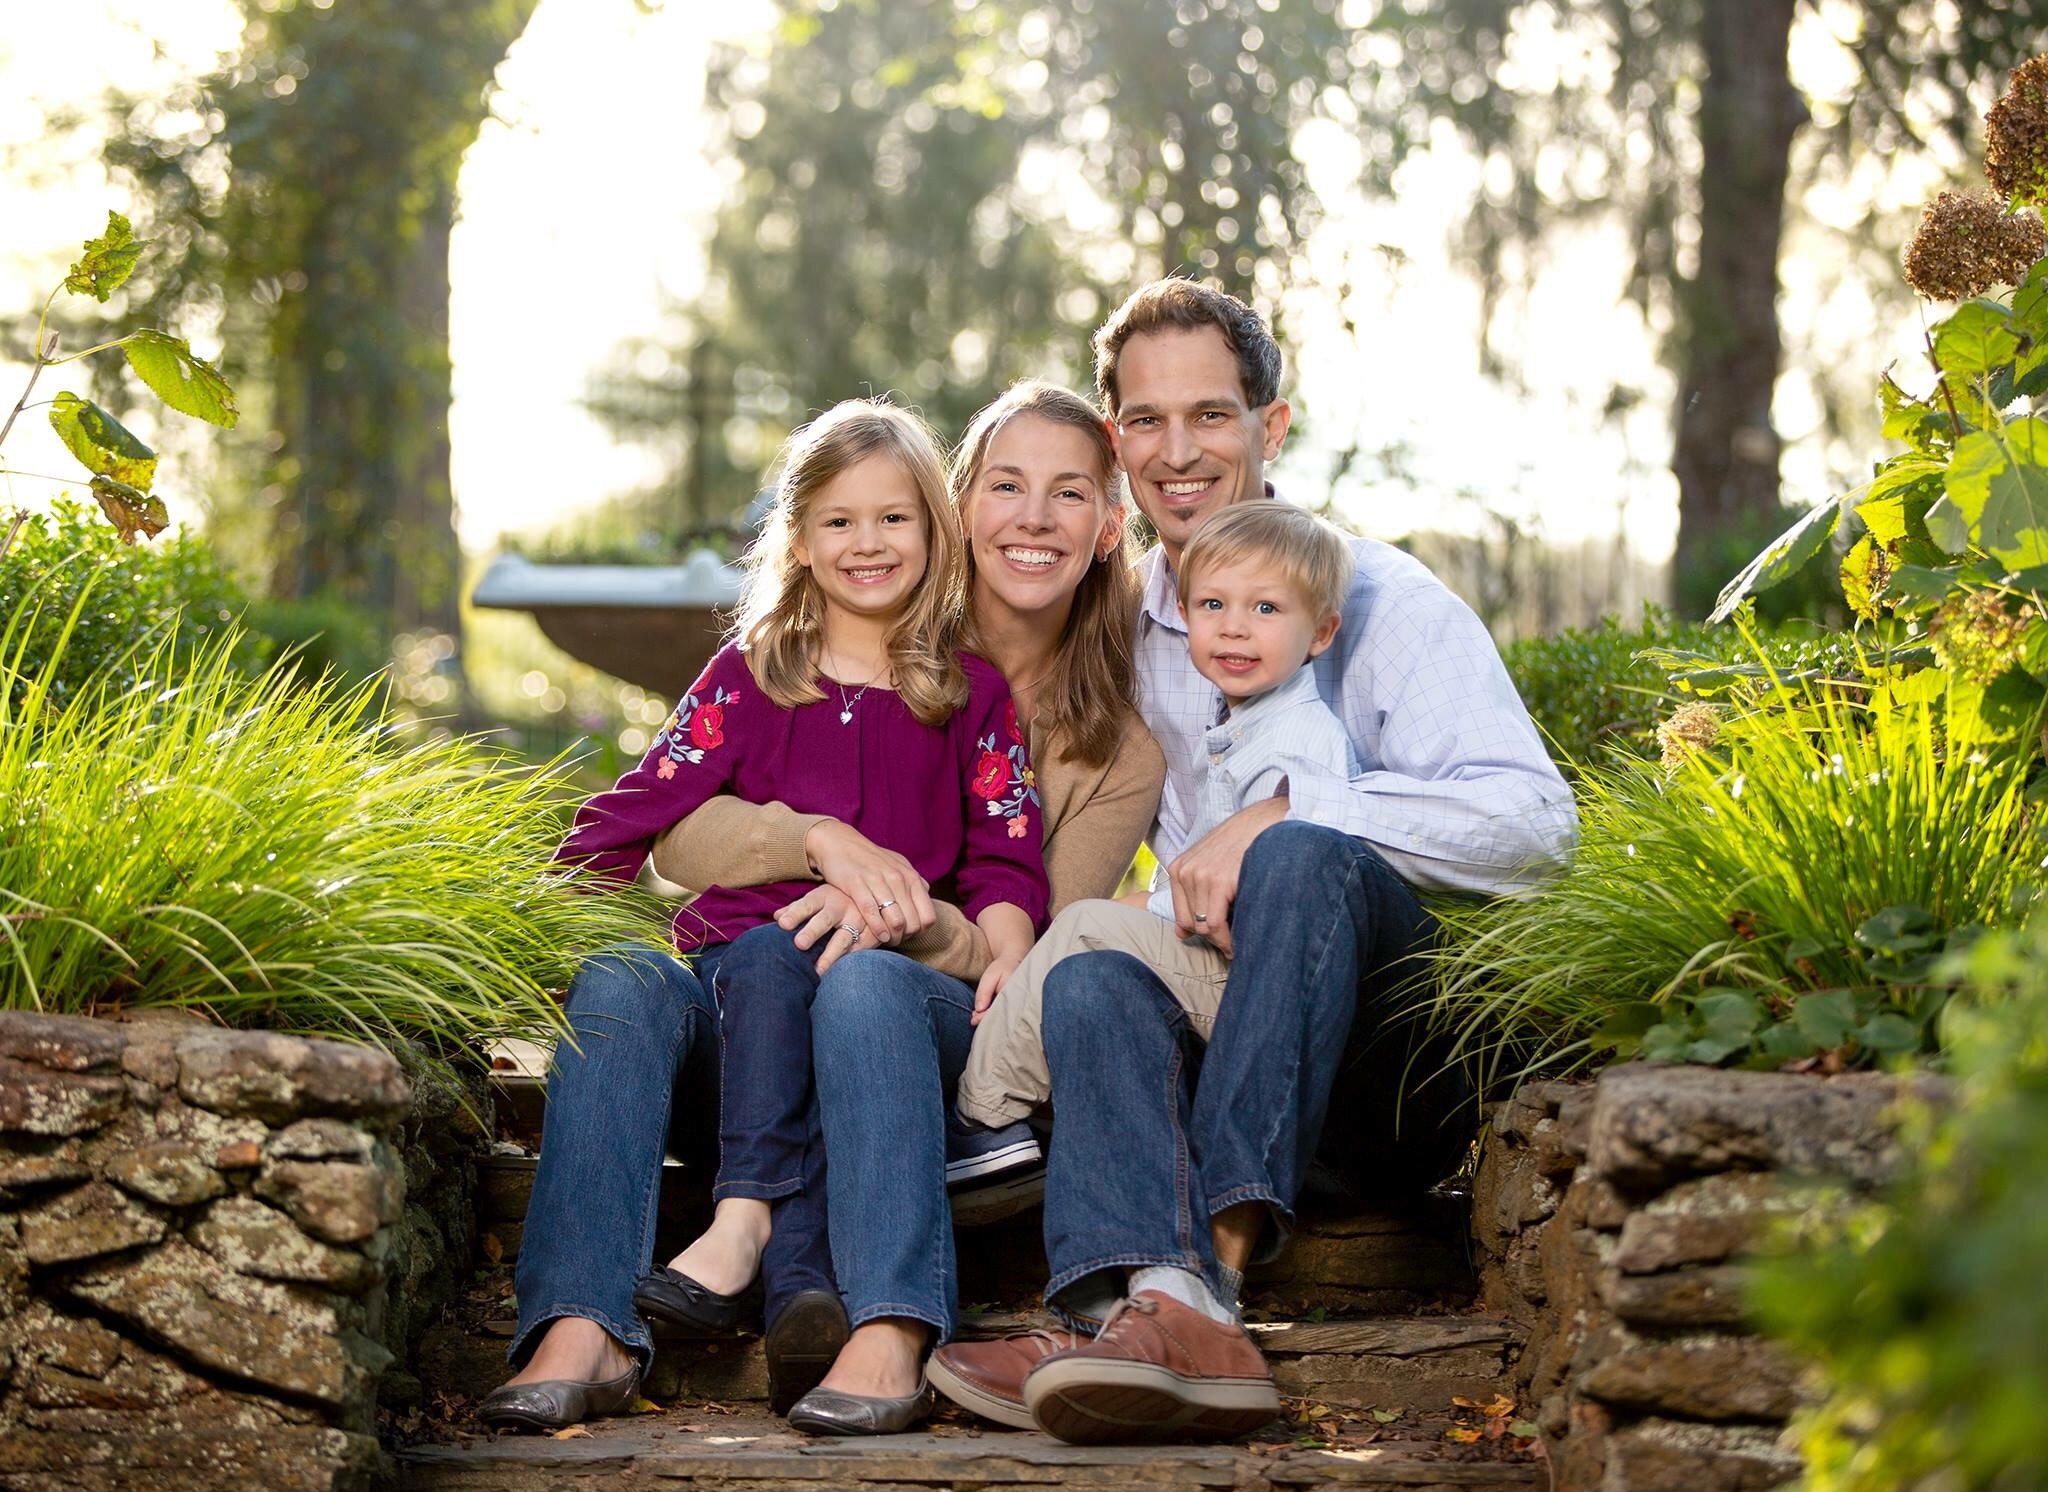 Unique Family Portrait Photoshoot Ideas You're Going to Love